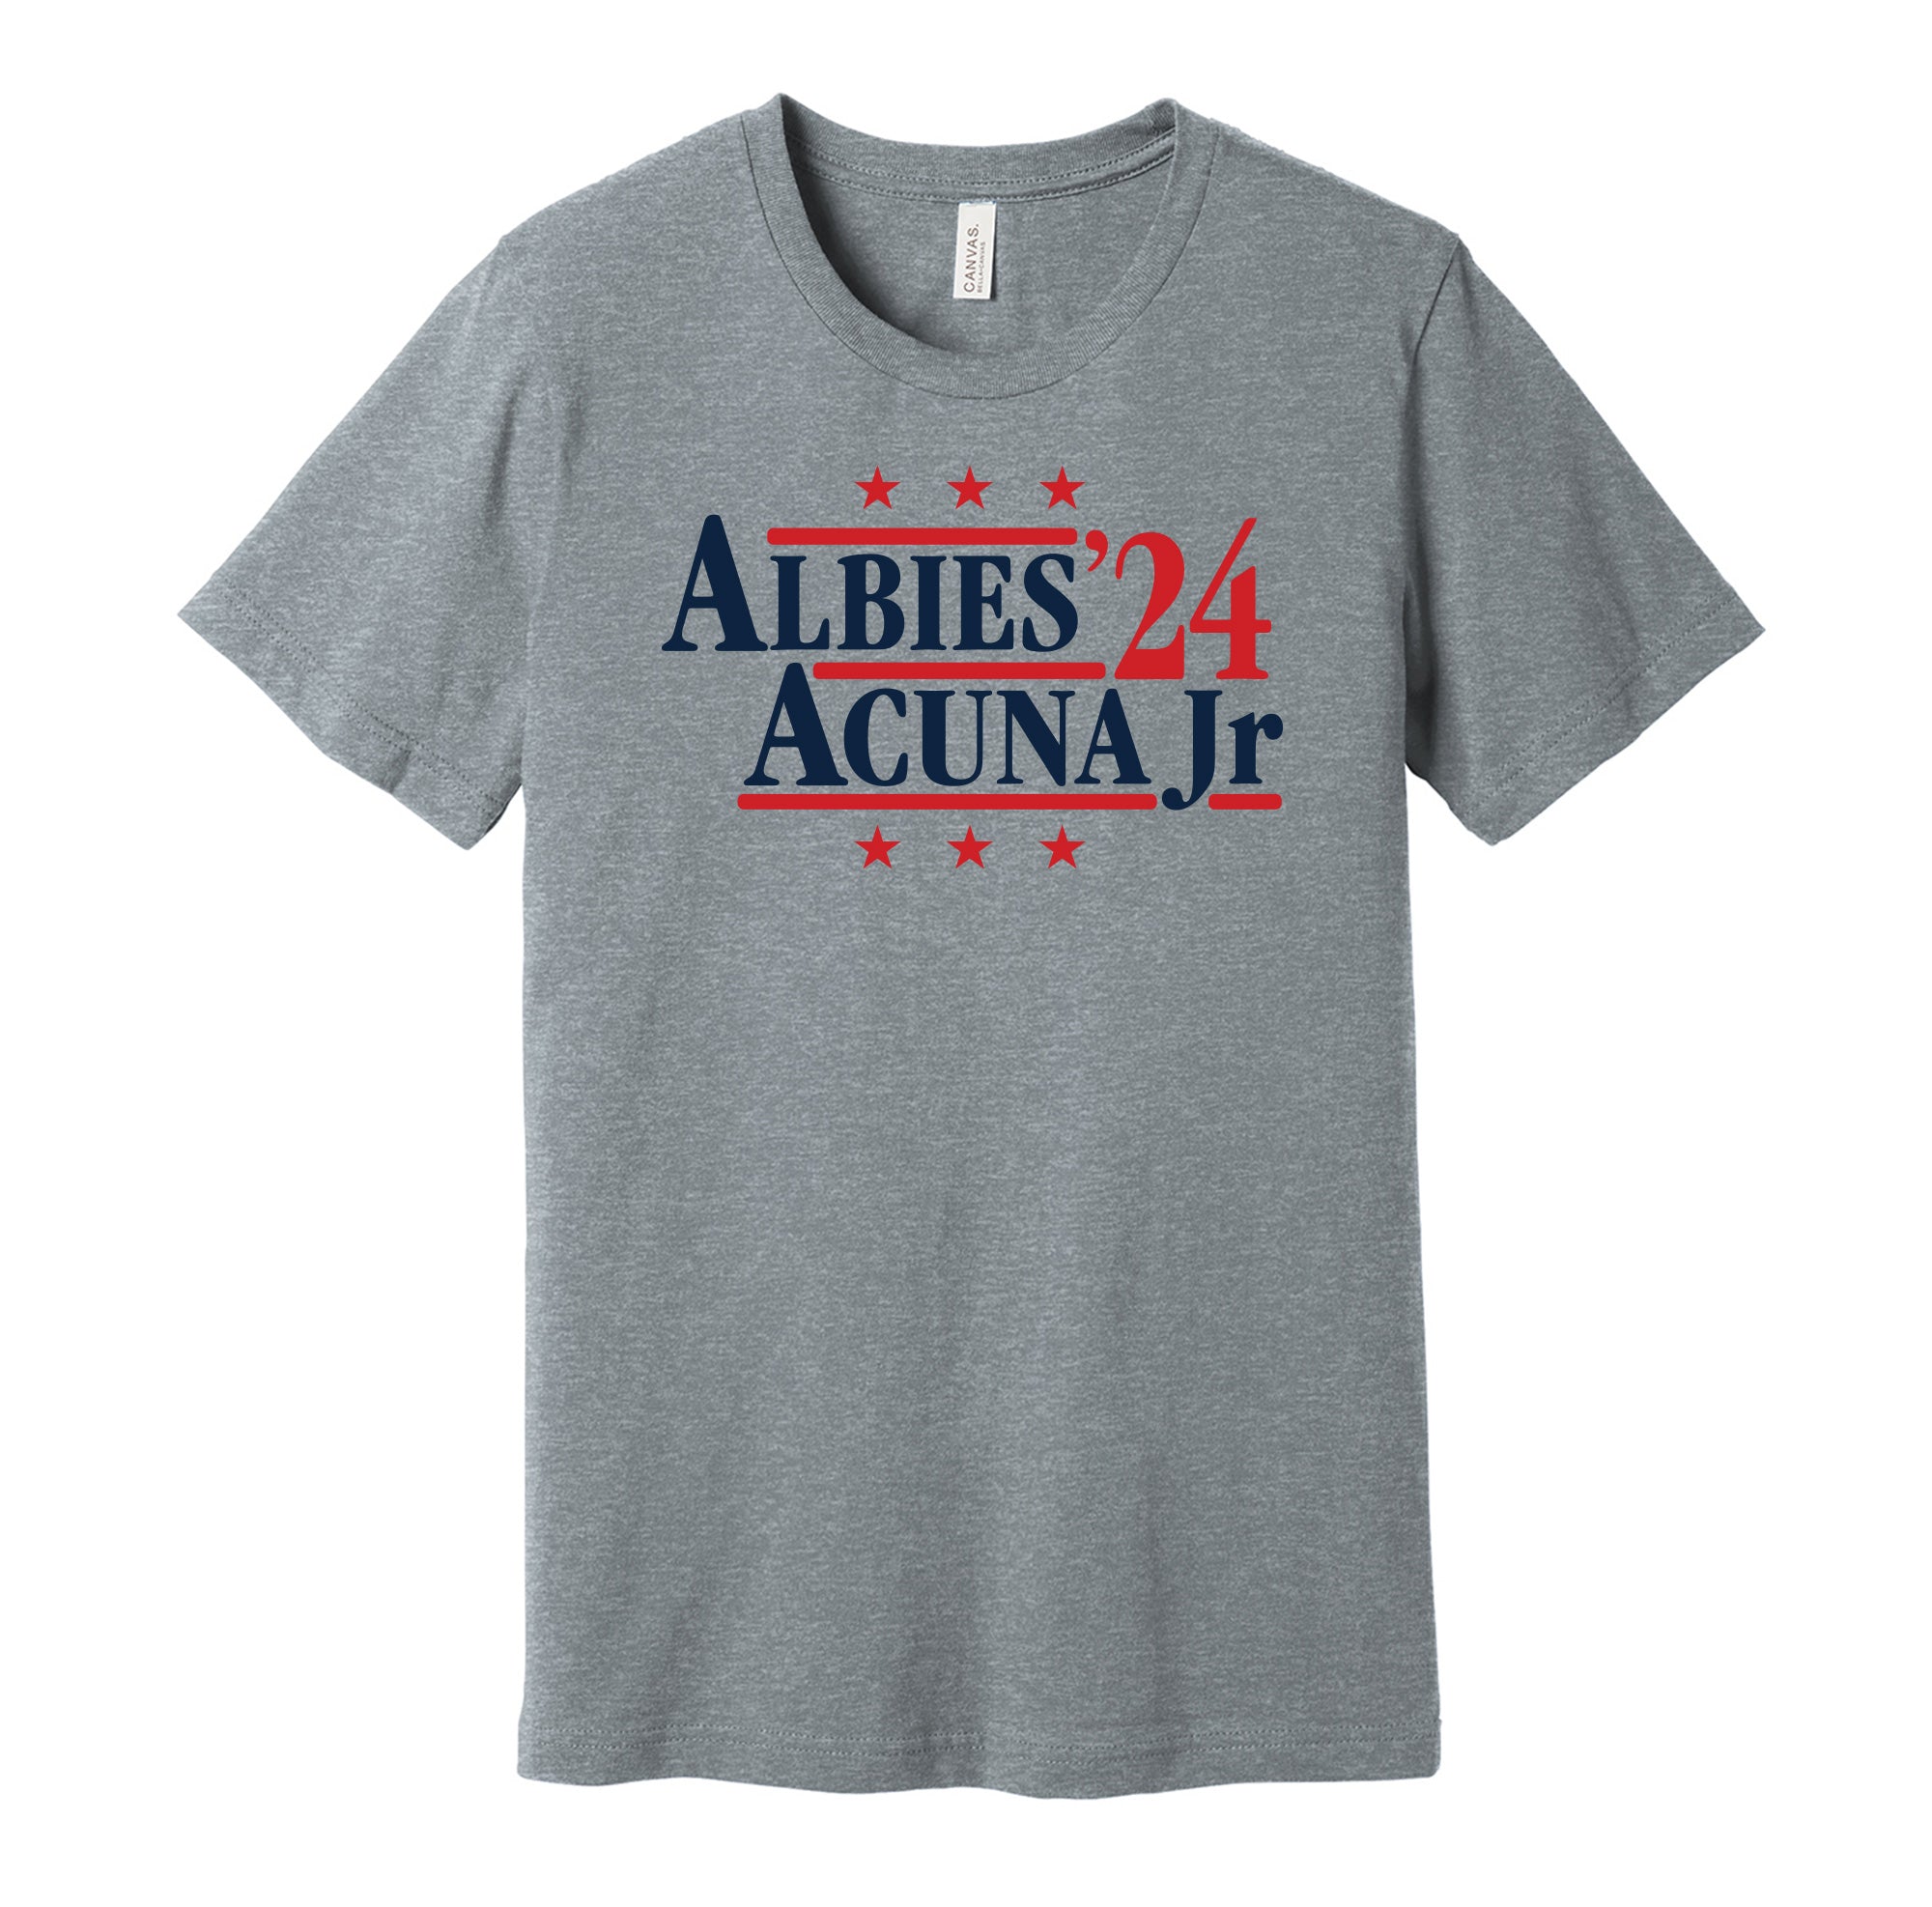 Acuna Albies 2020 Make Atlanta Champs Again T-Shirt - Yeswefollow